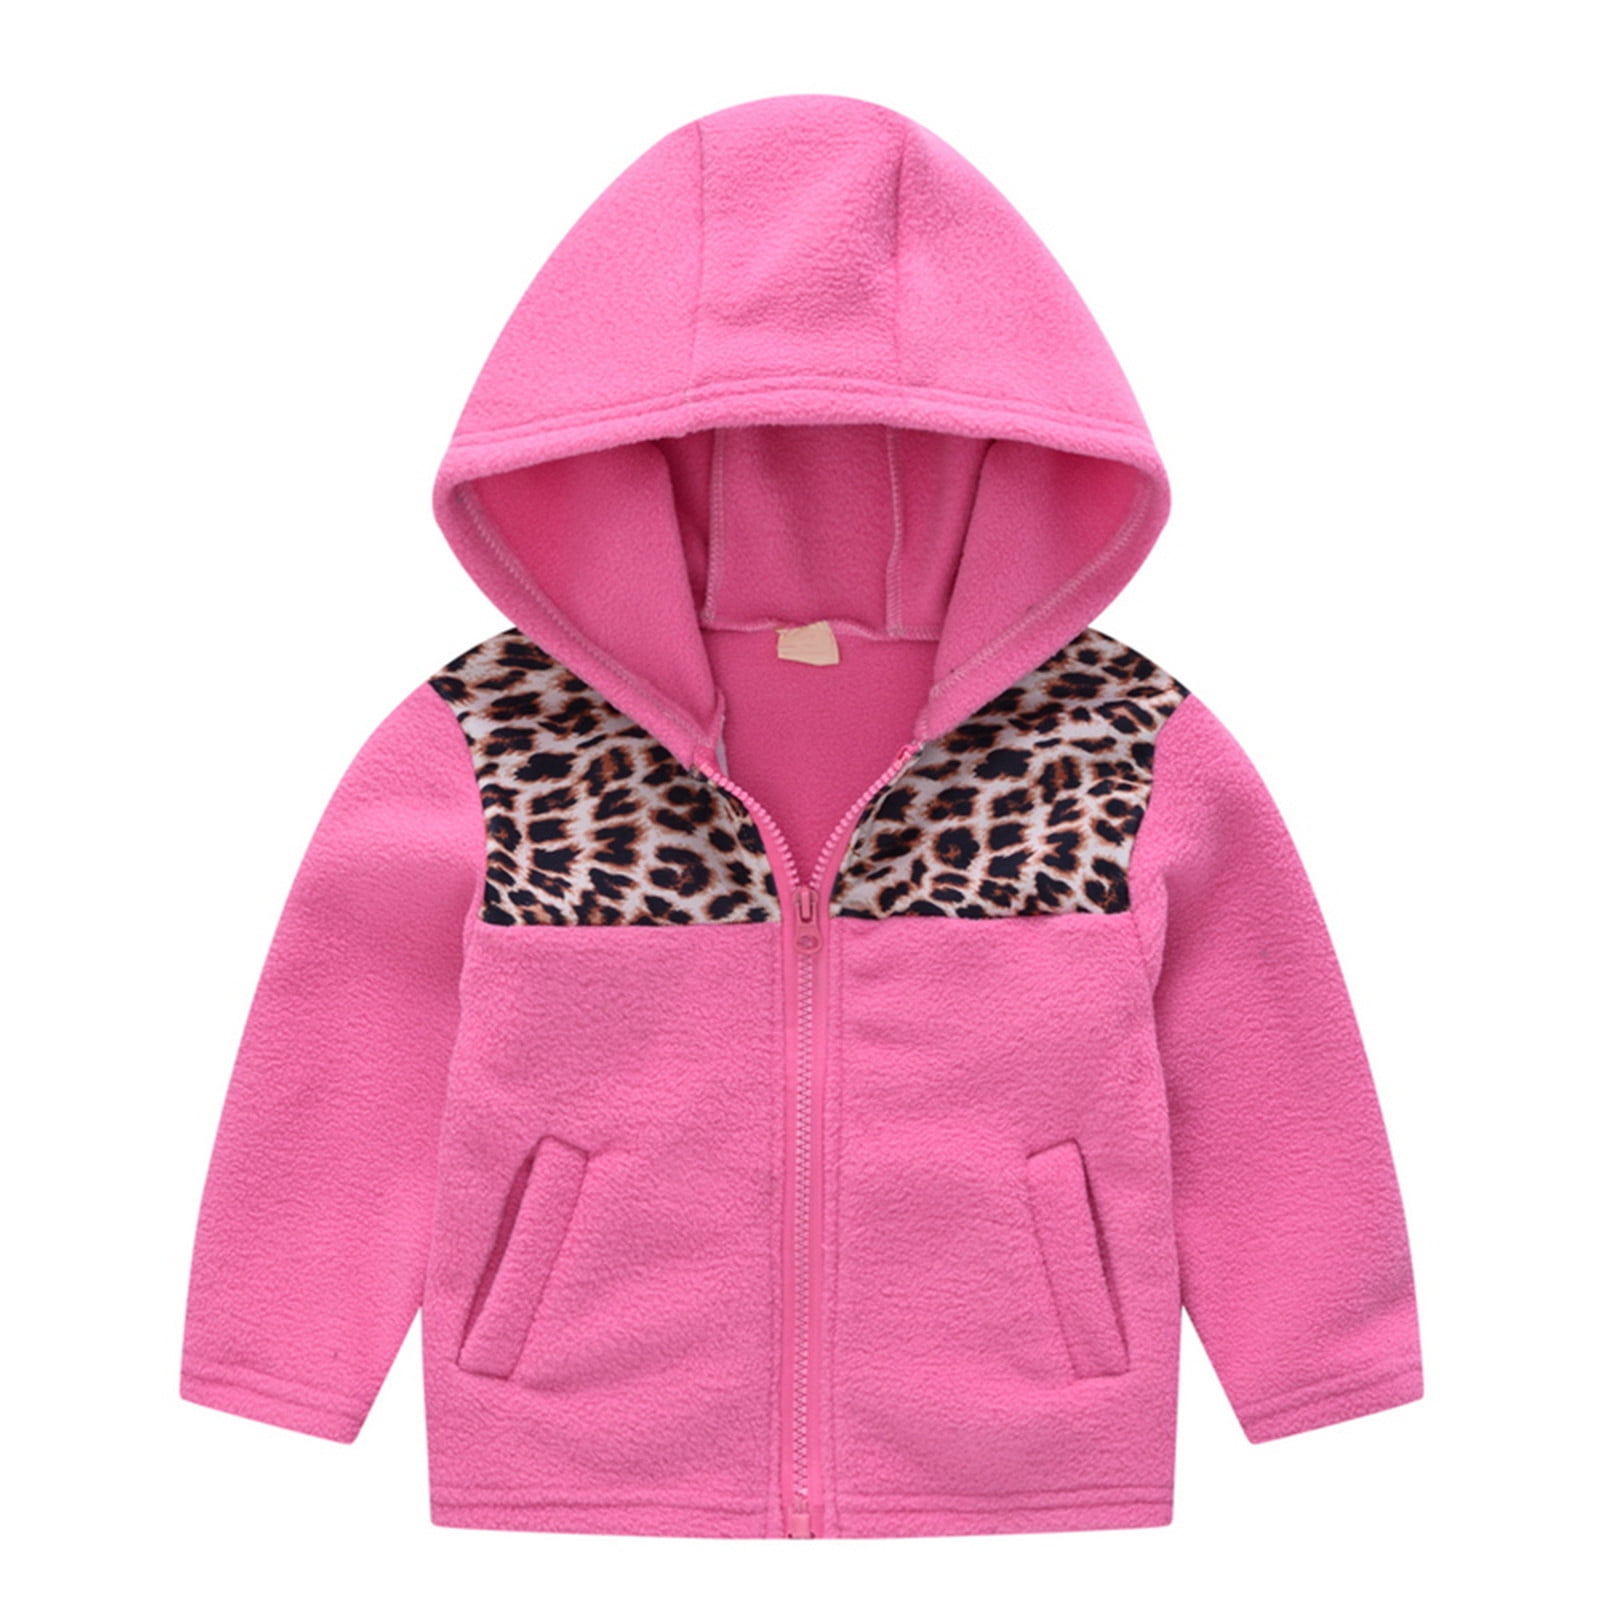 Toddler Boys Girls Winter Long Sleeve Fashion Leopard Prints Thick Warm ...